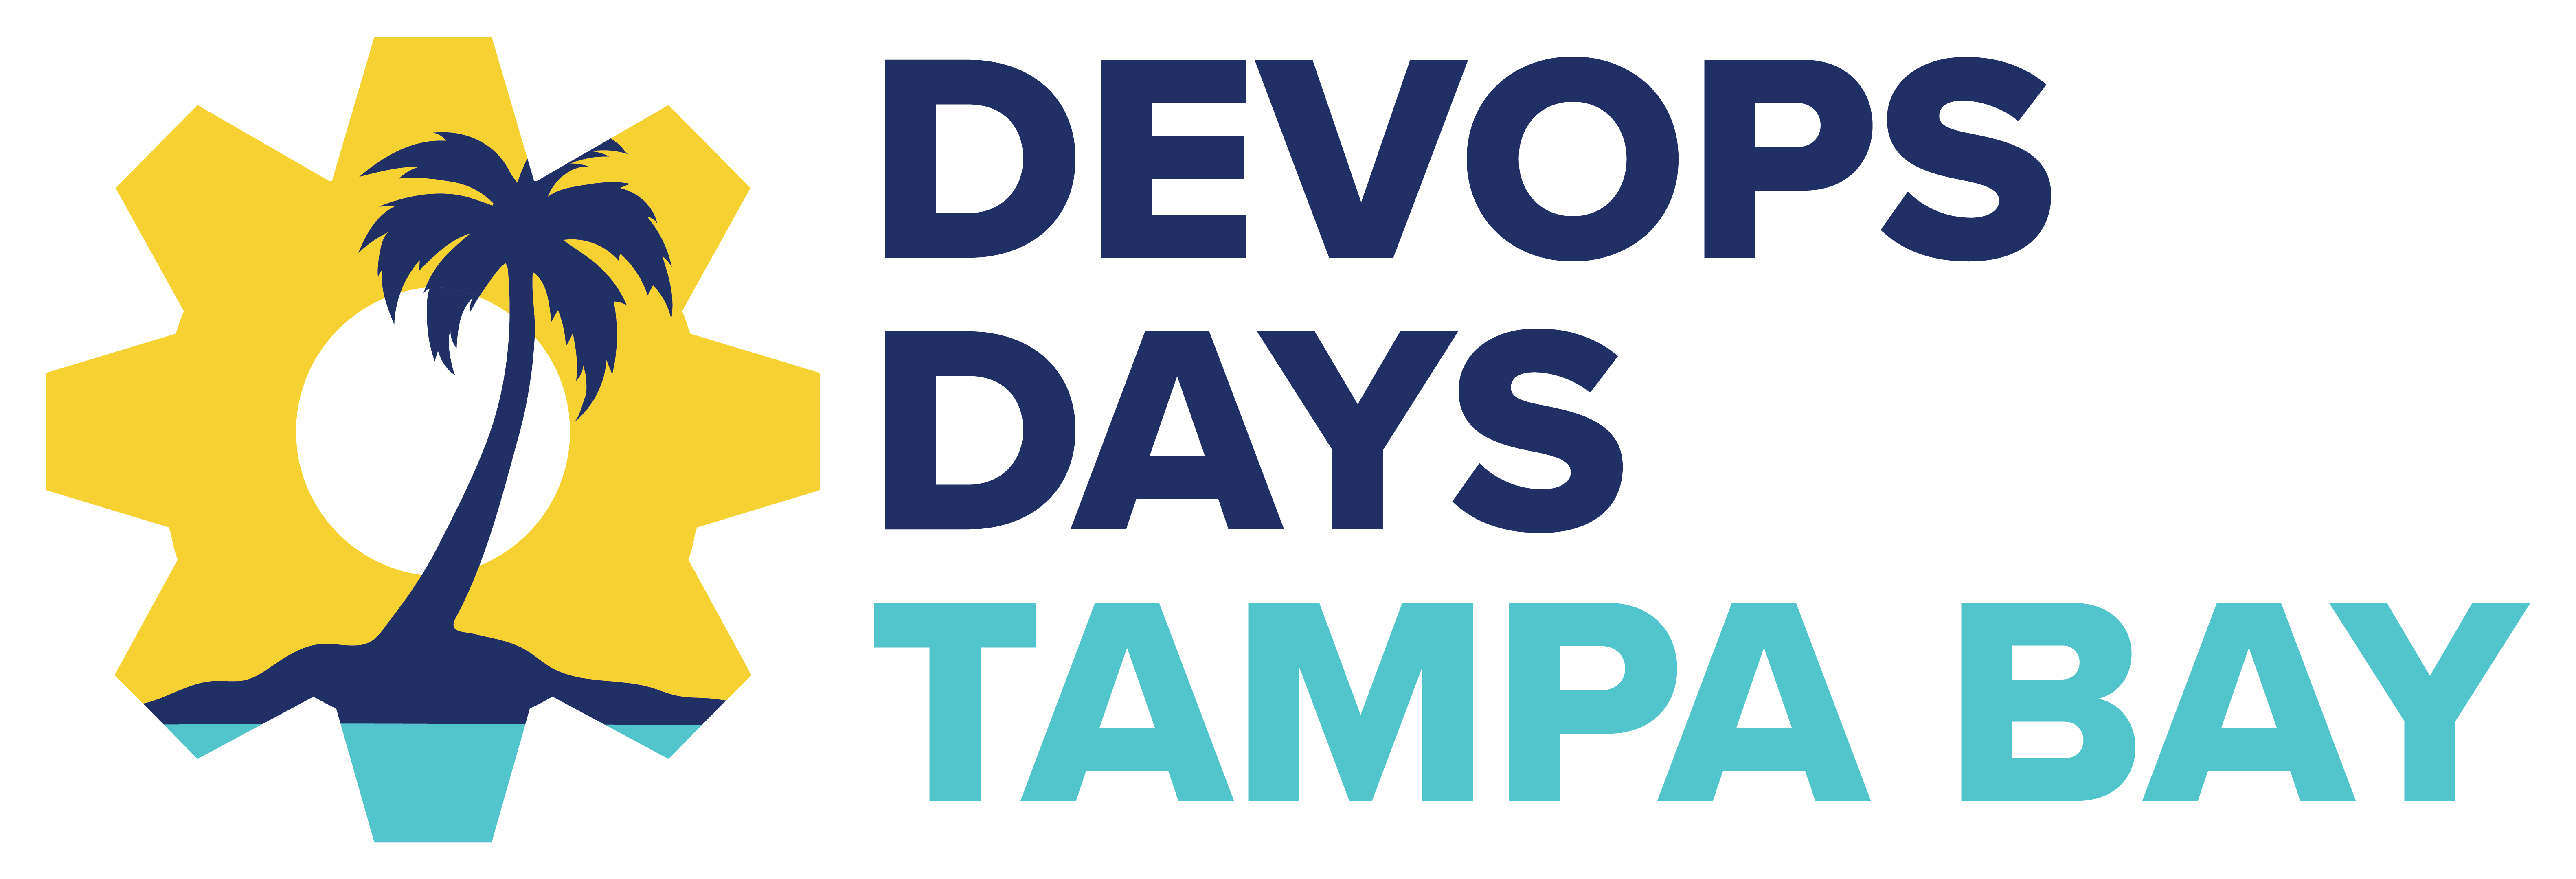 Gehtsoft becomes a sponsor of DevOps Days in Tampa Bay